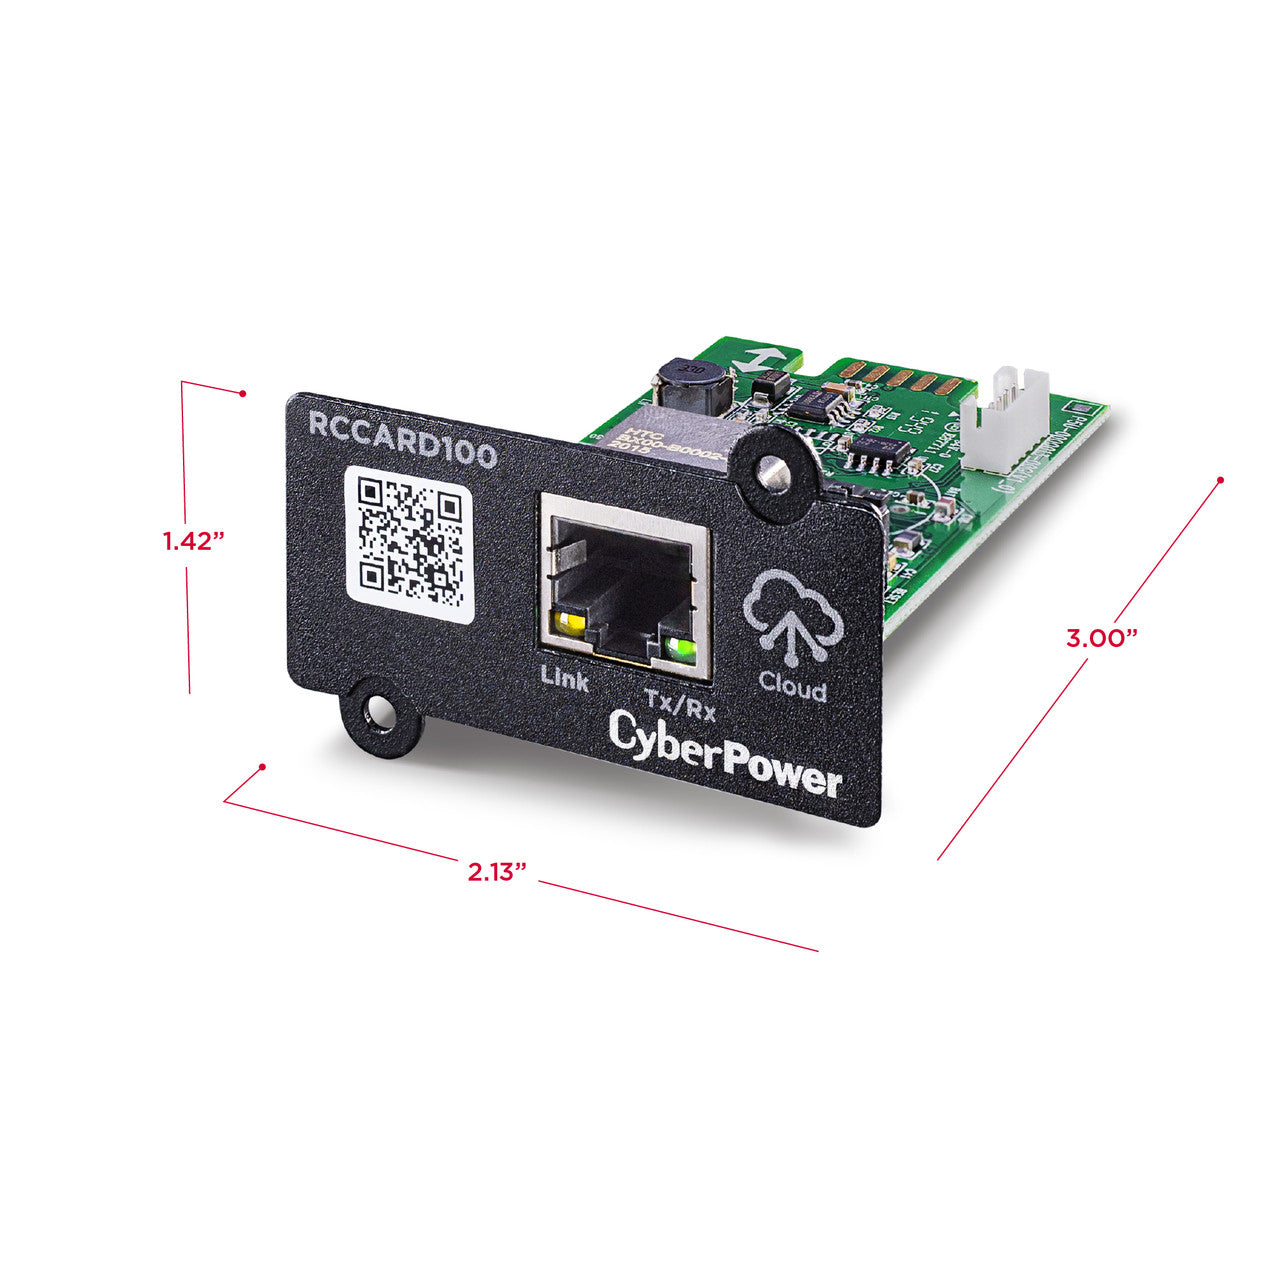 CyberPower RWCCARD100 UPS monitoring card